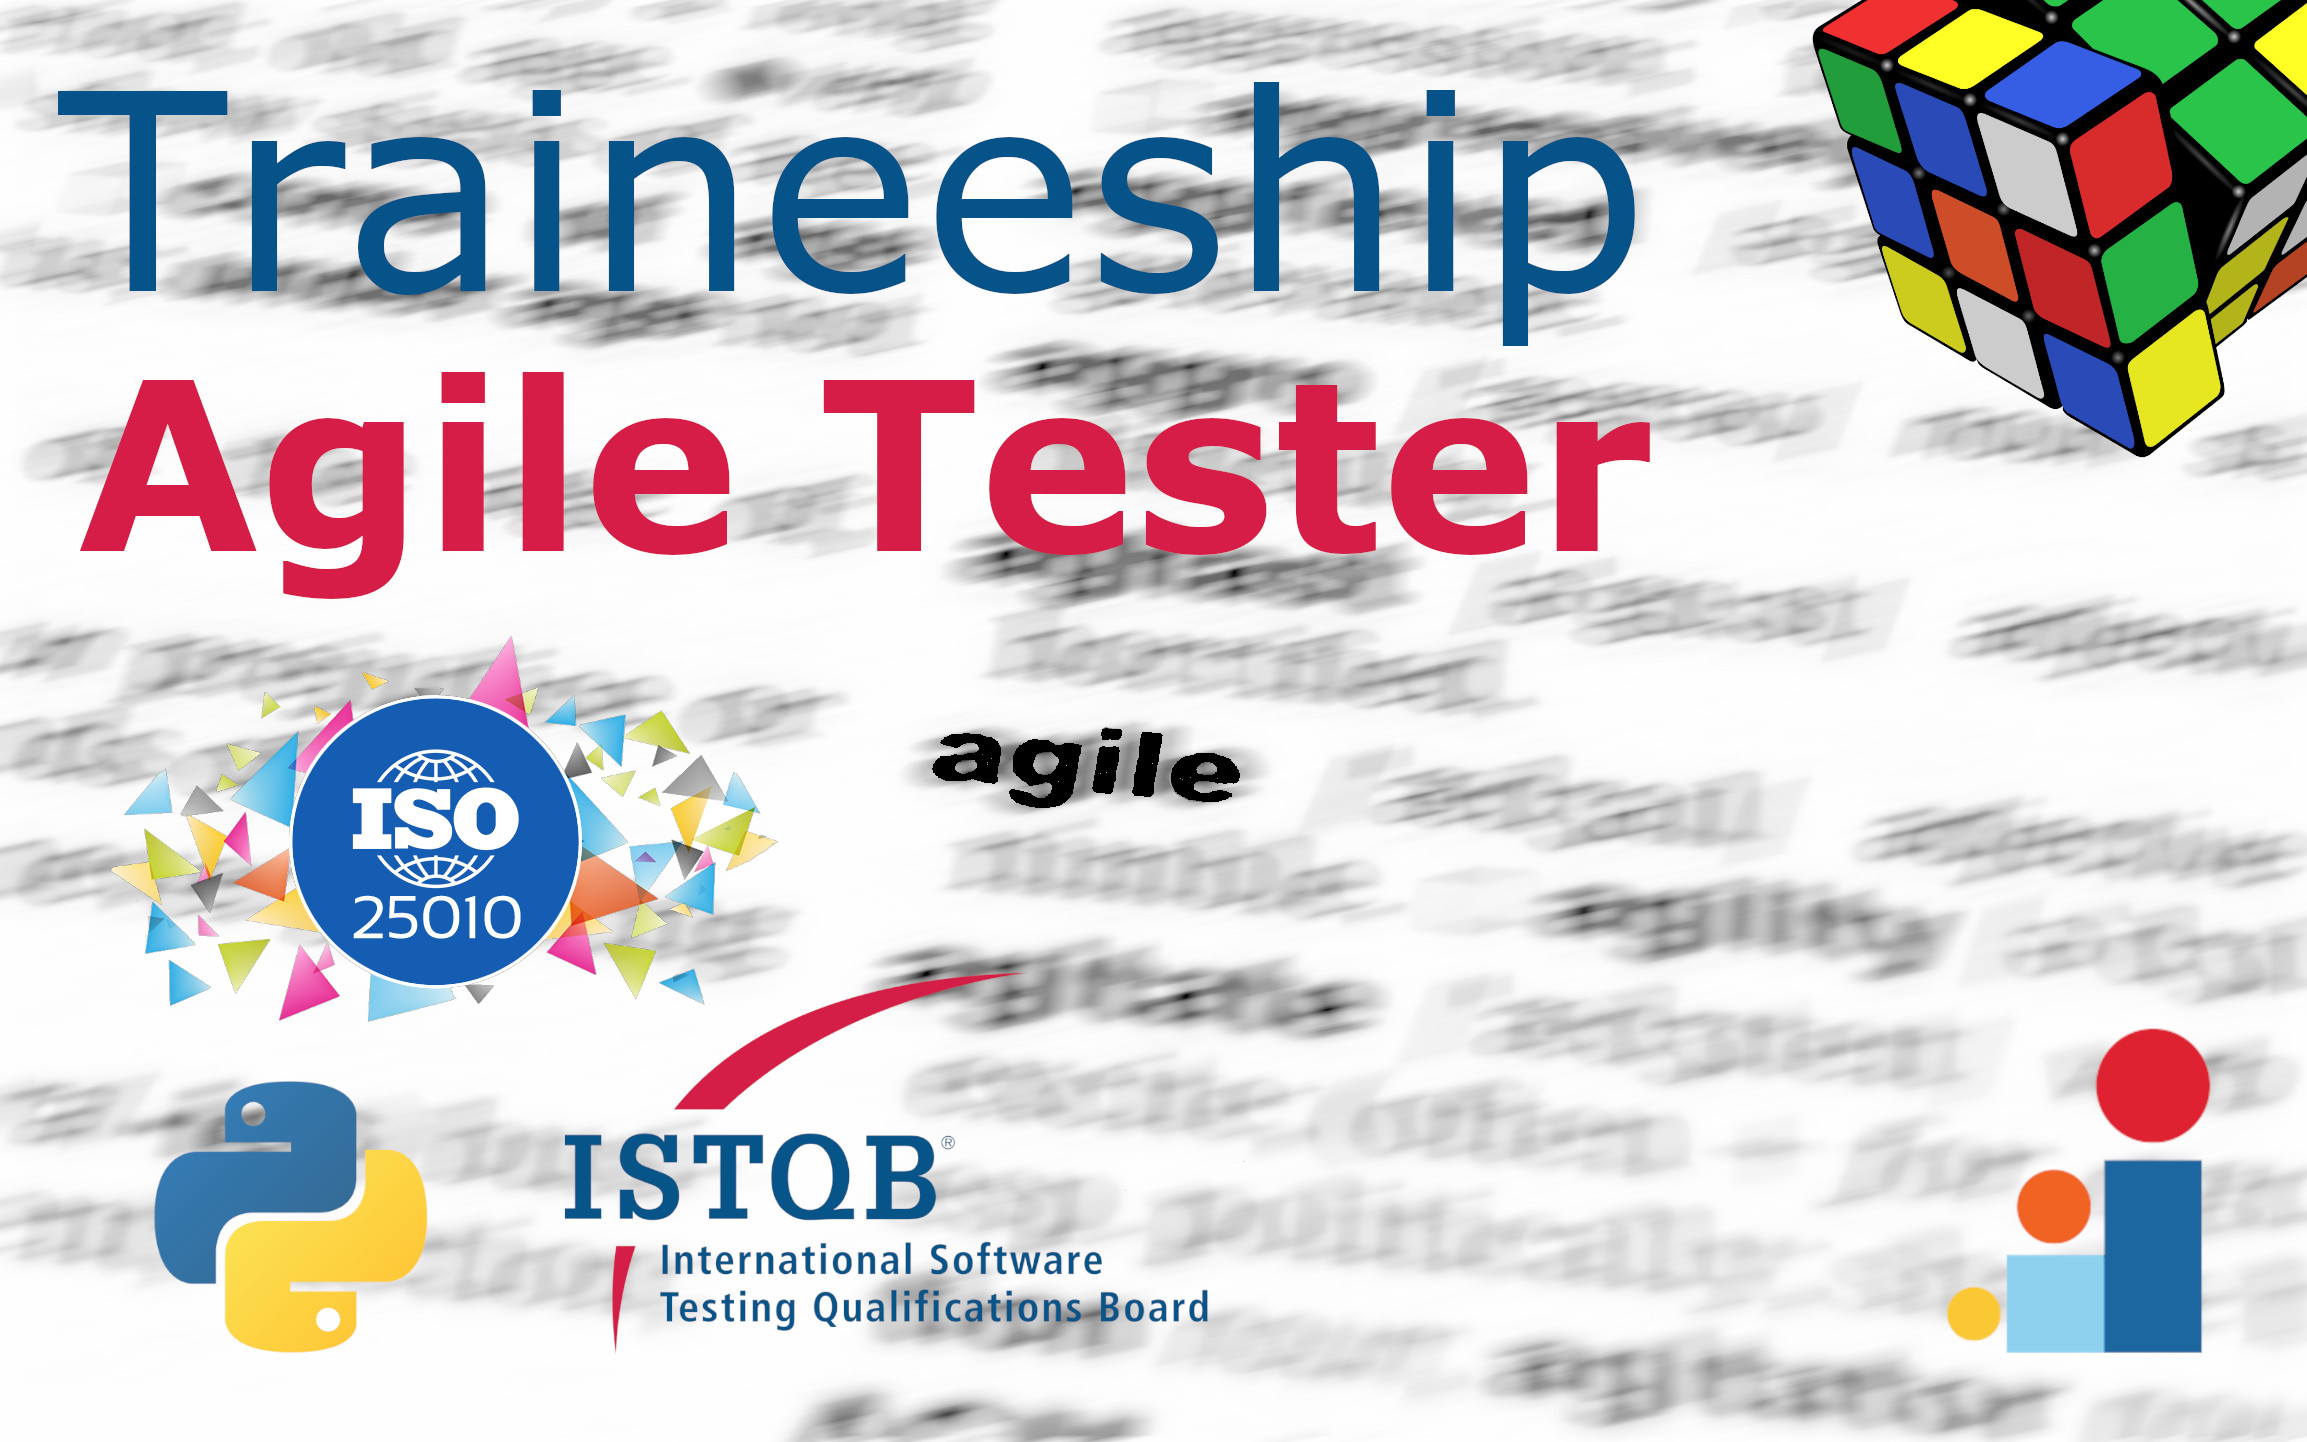 traineeship-agile-tester-blur